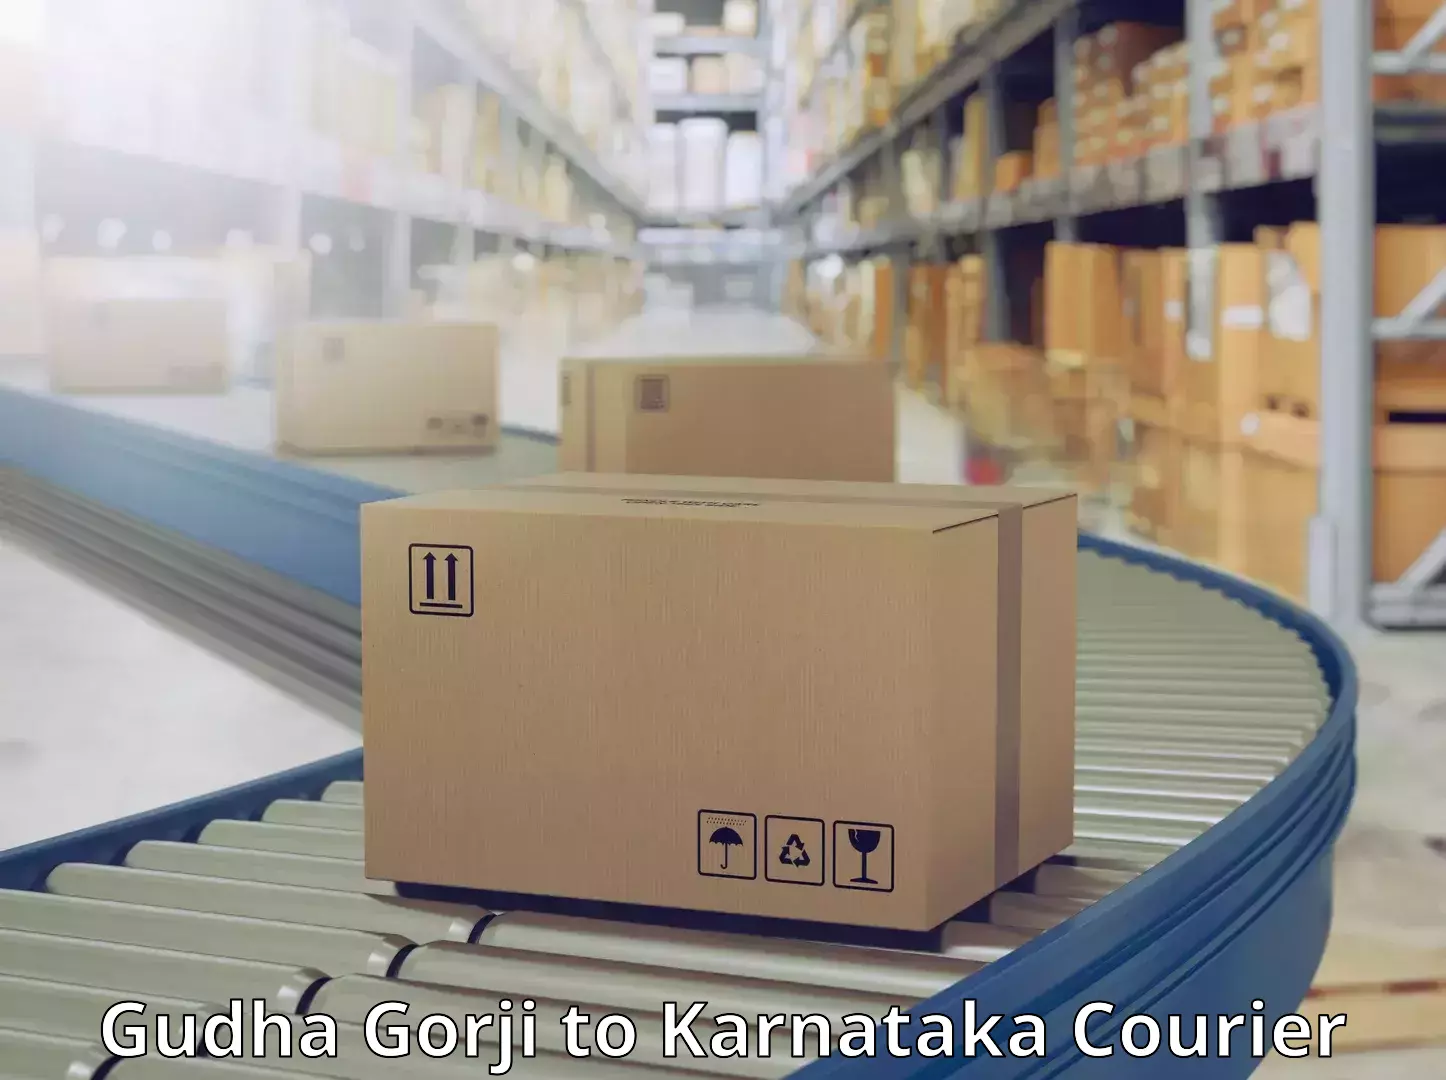 Subscription-based courier Gudha Gorji to Karnataka